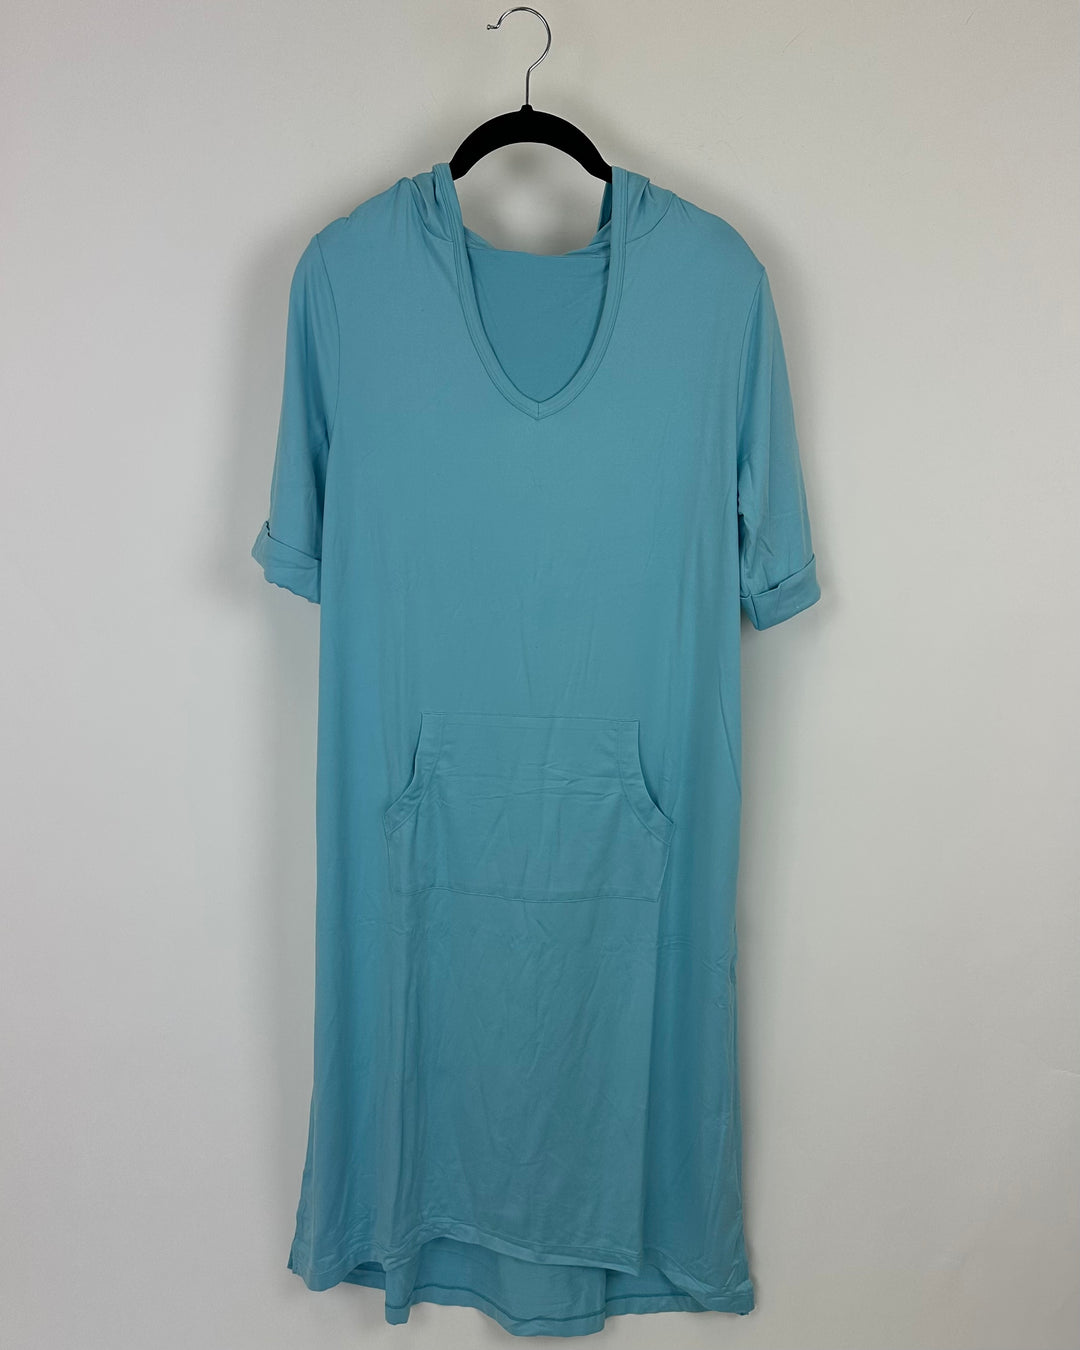 Light Blue Lounge Dress - Size 6/8